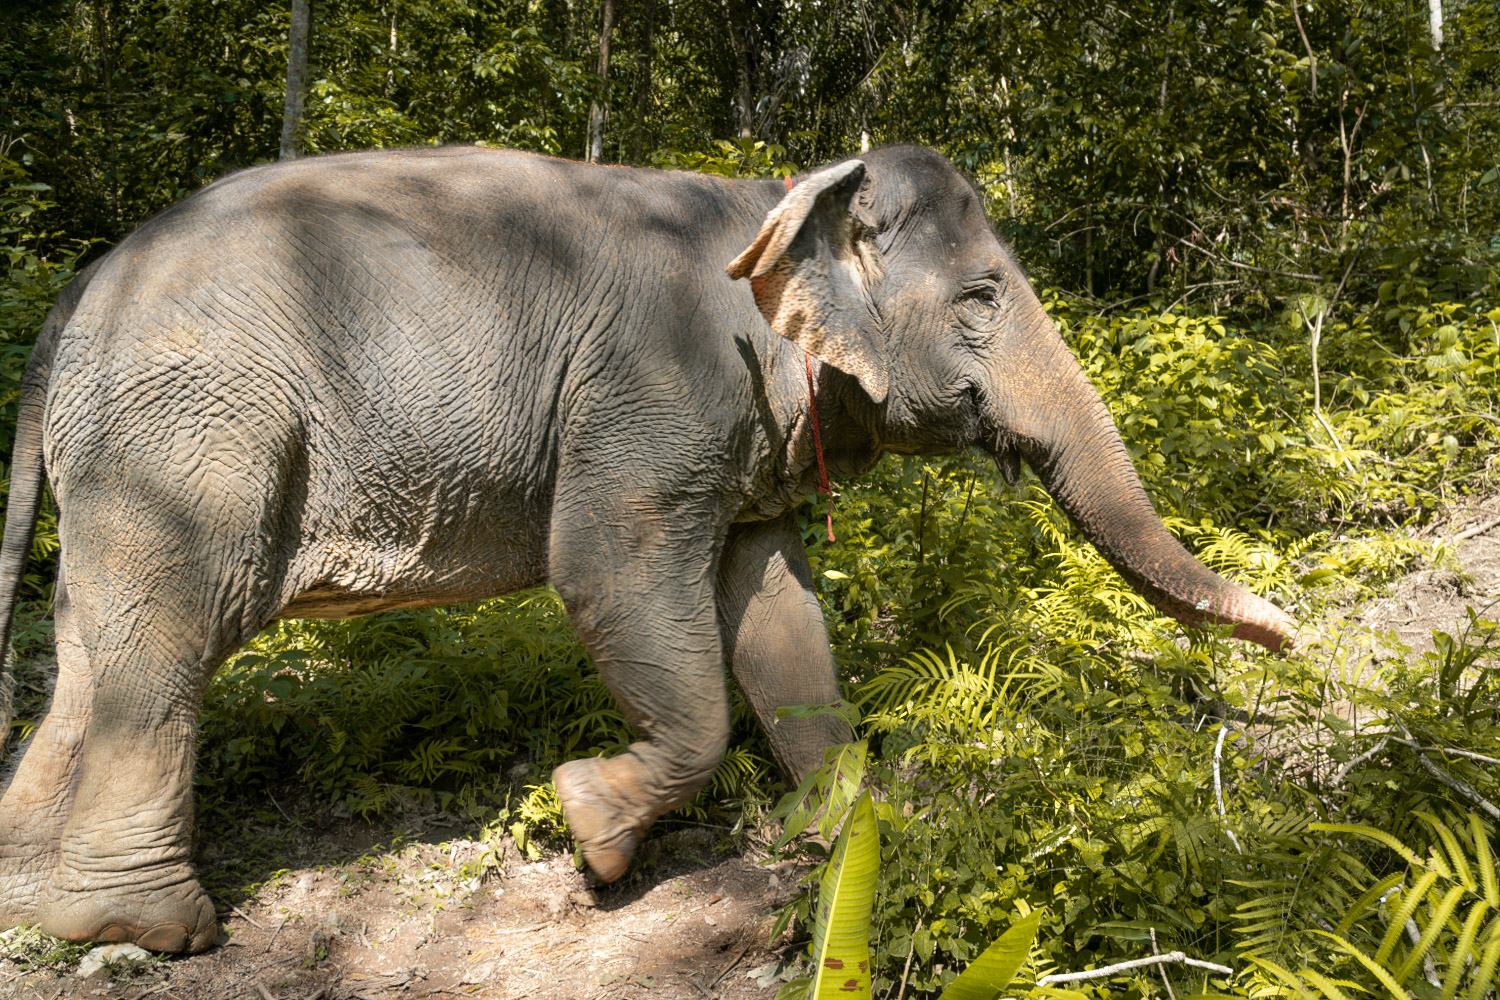 An Elephant walking through the Jungle